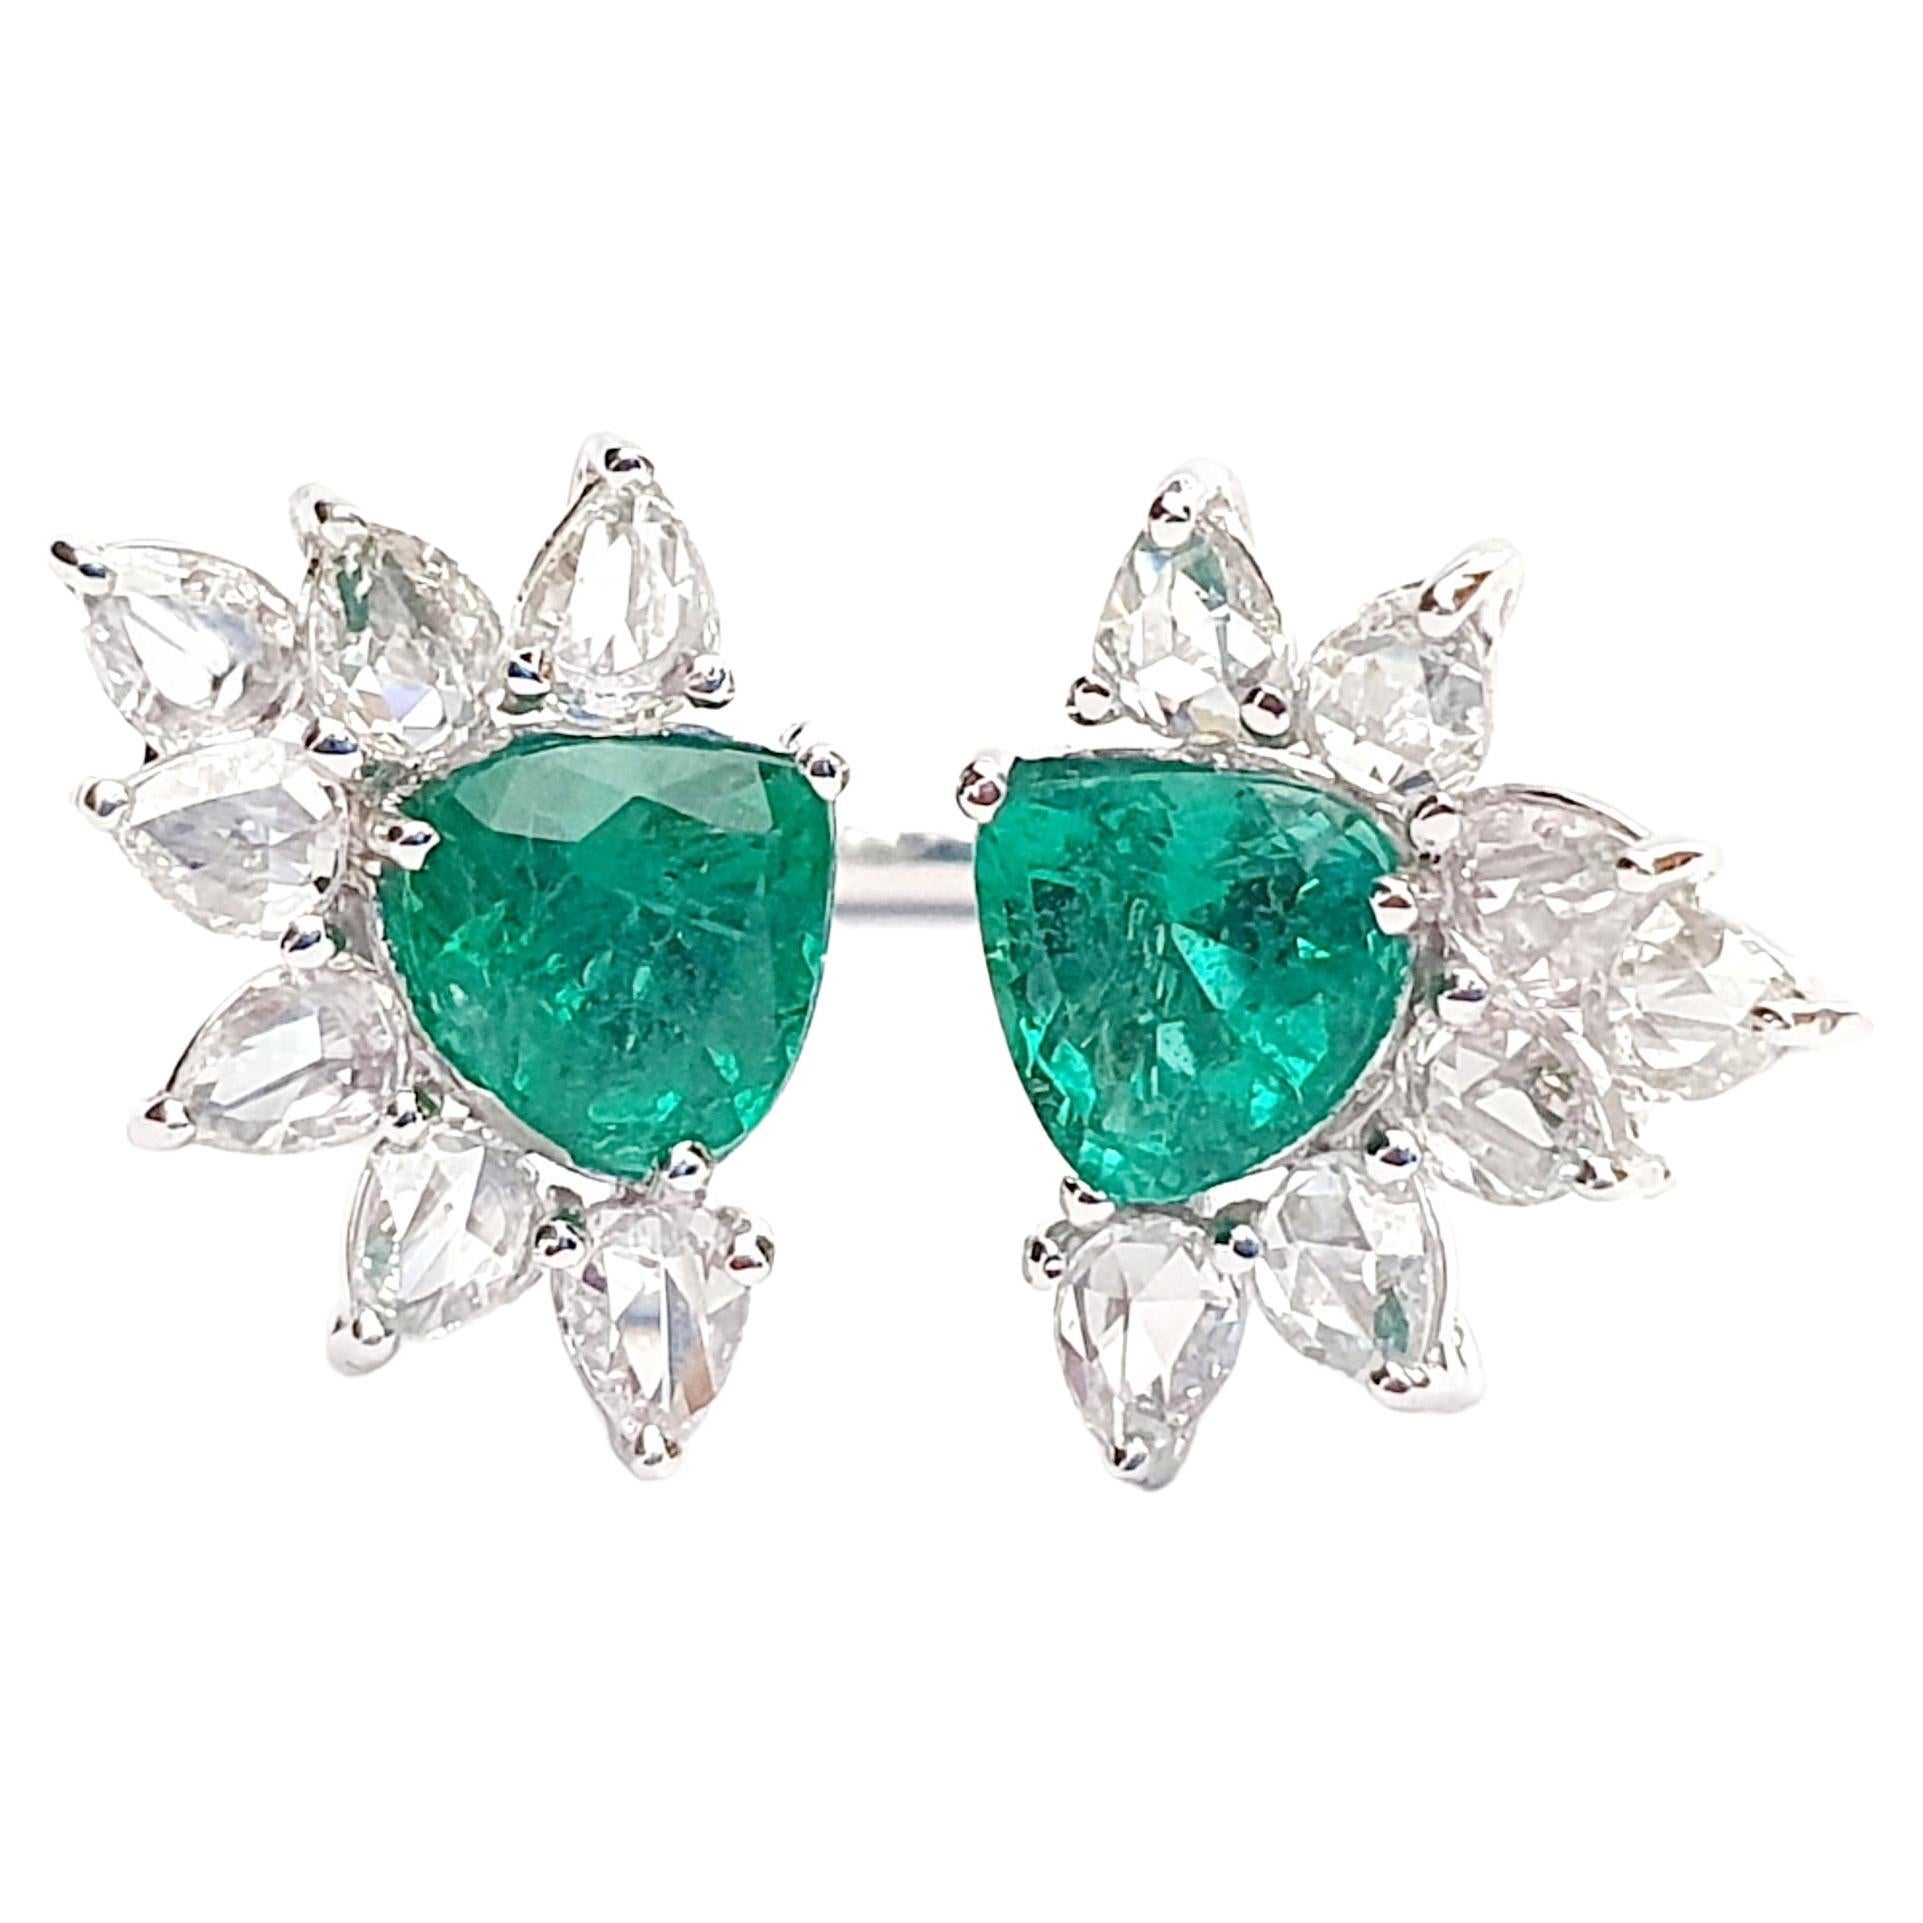 Emerald & Diamond Ring Studded in 18k White Gold